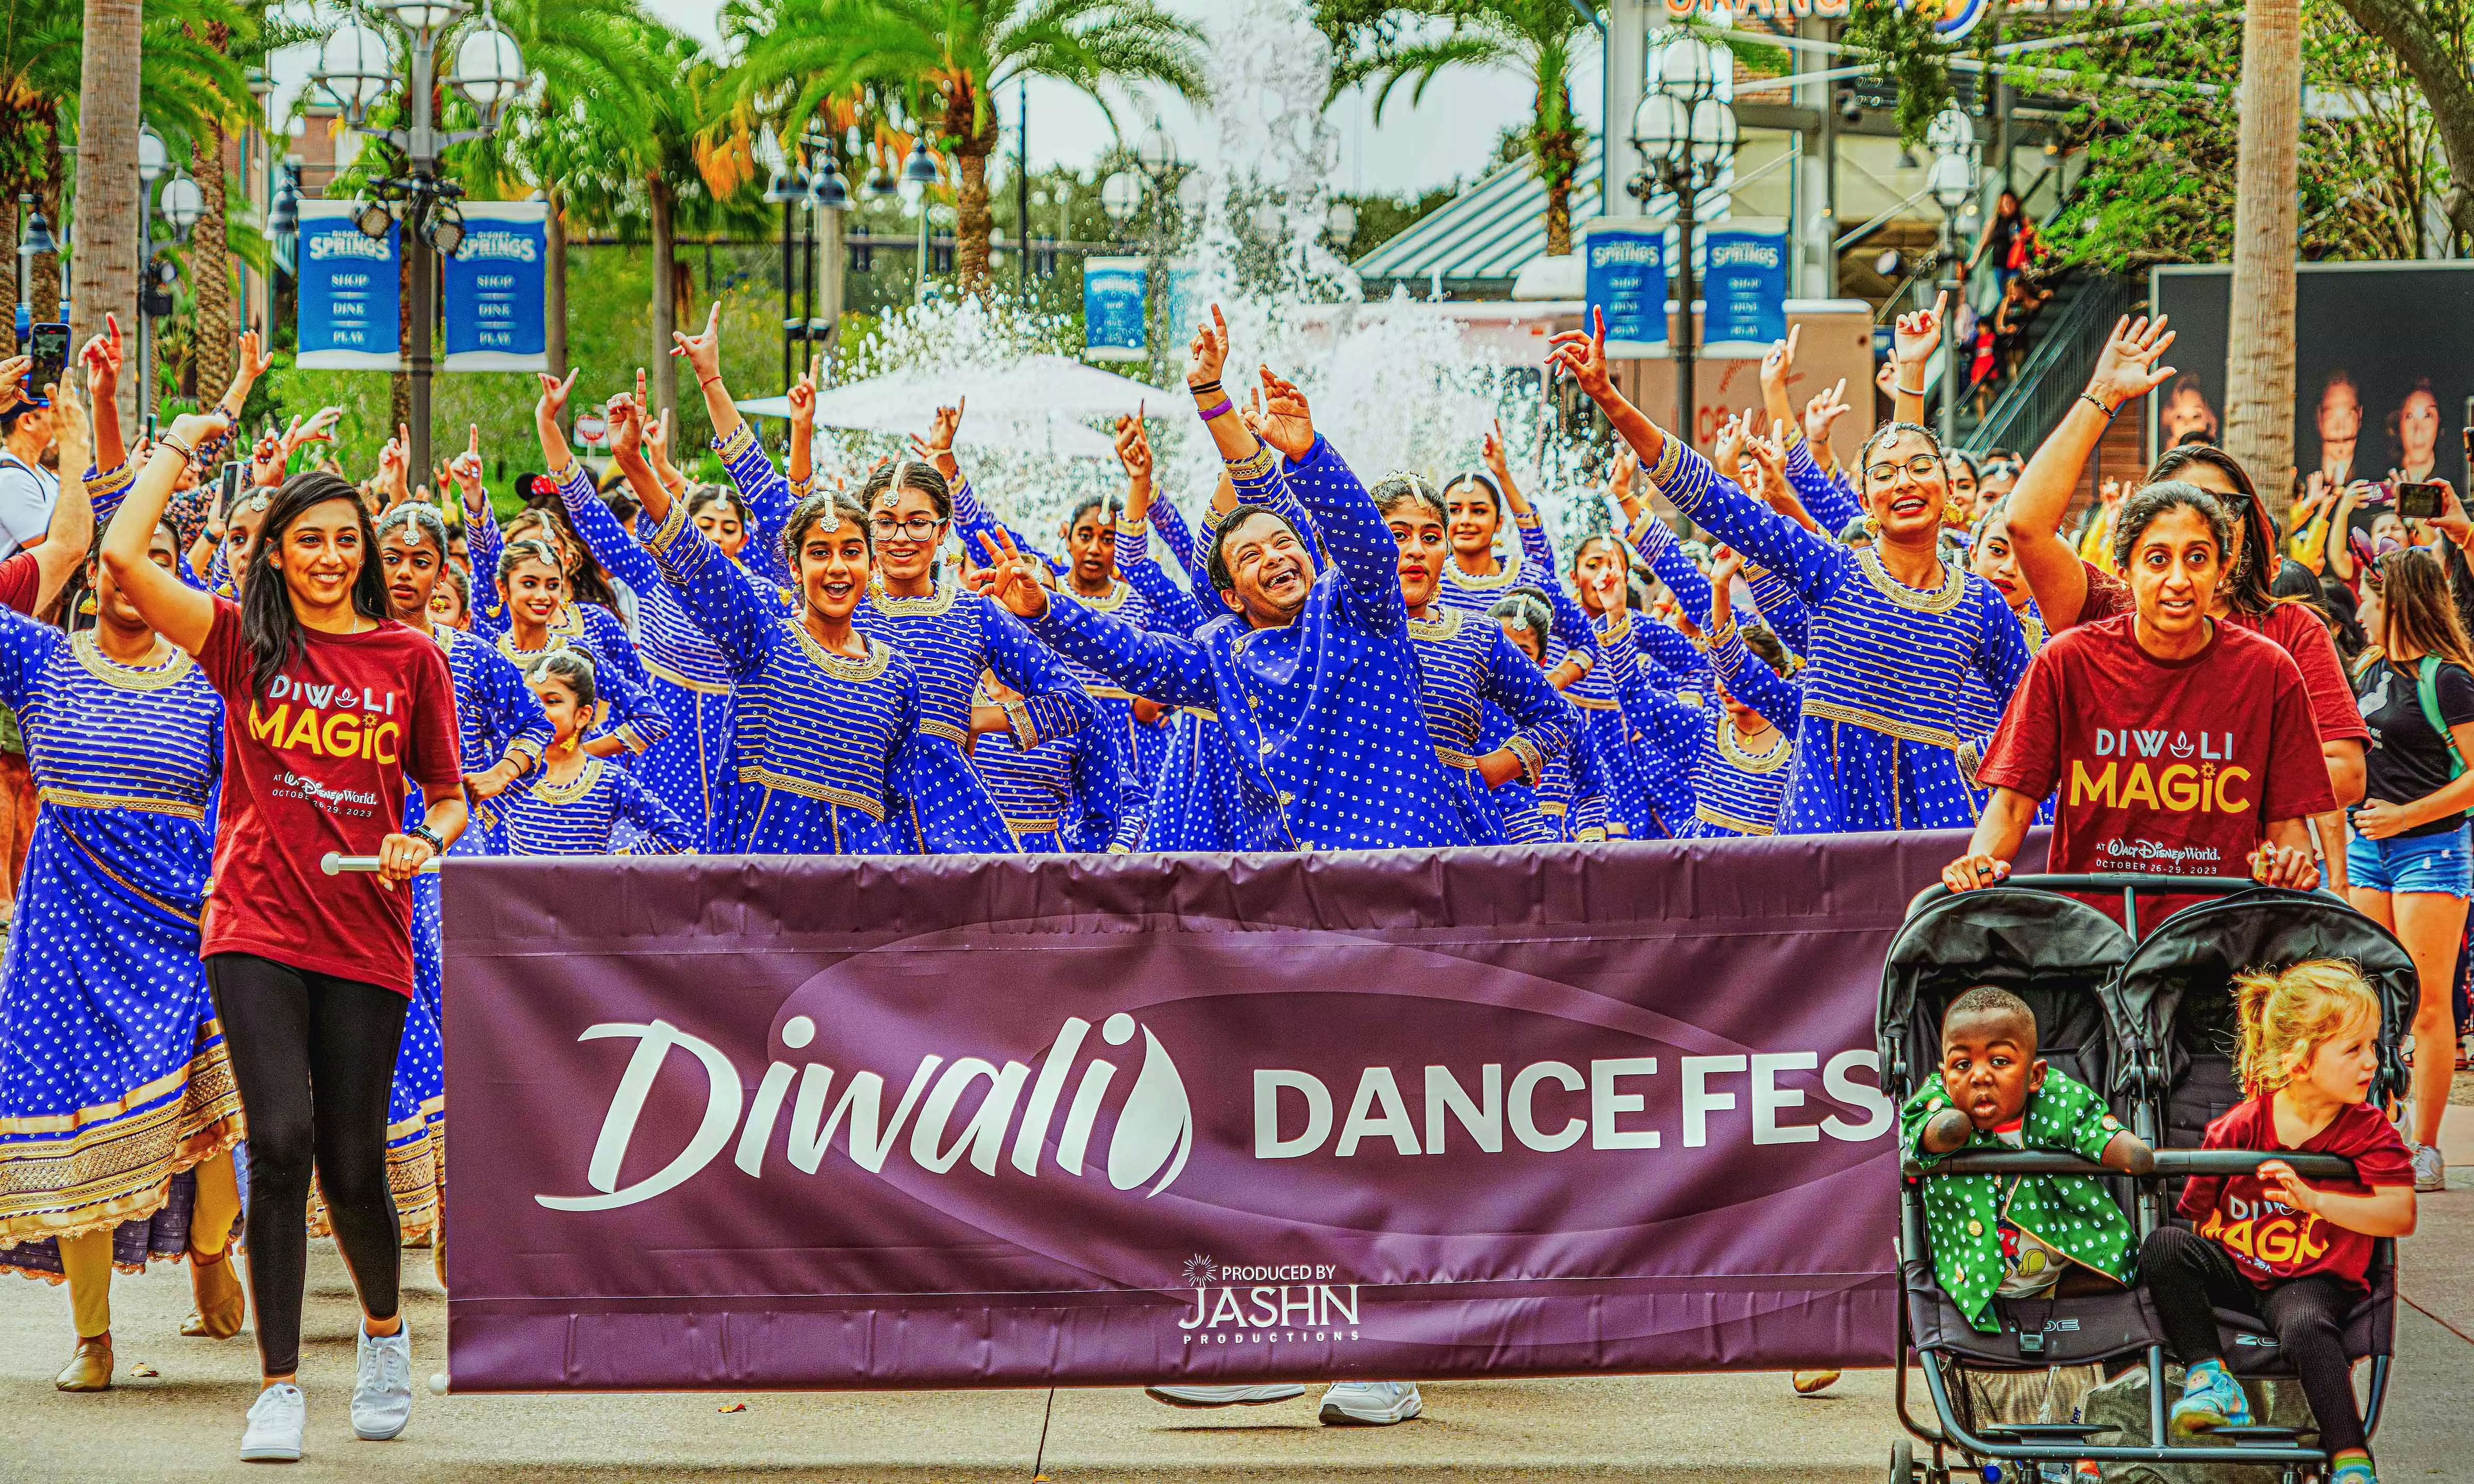 In a first, Diwali celebrated at Walt Disney World Resort in Florida